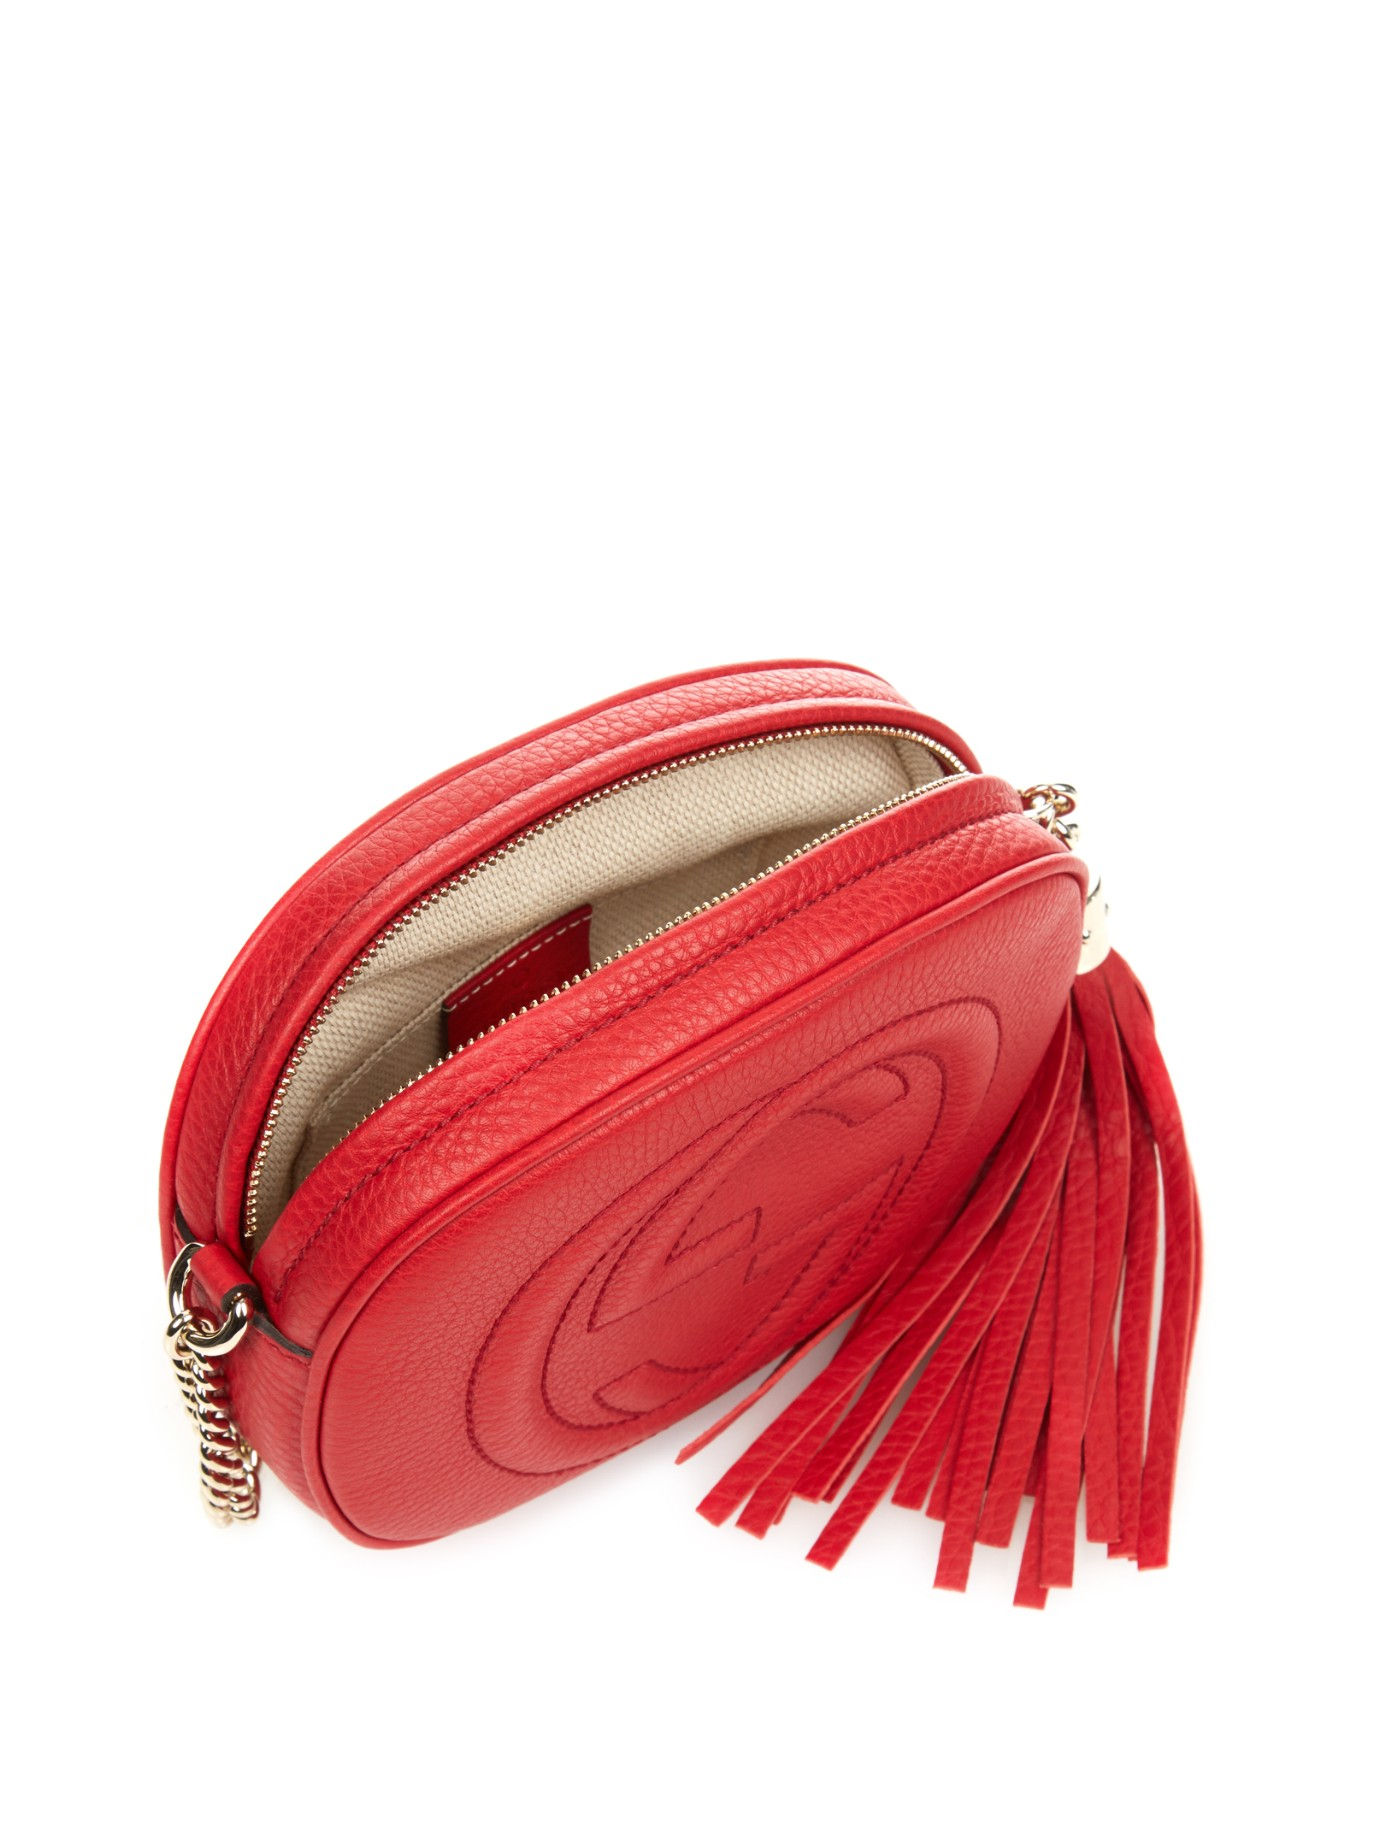 Gucci Mini Soho Chain-Strap Cross-Body Bag in Red - Lyst